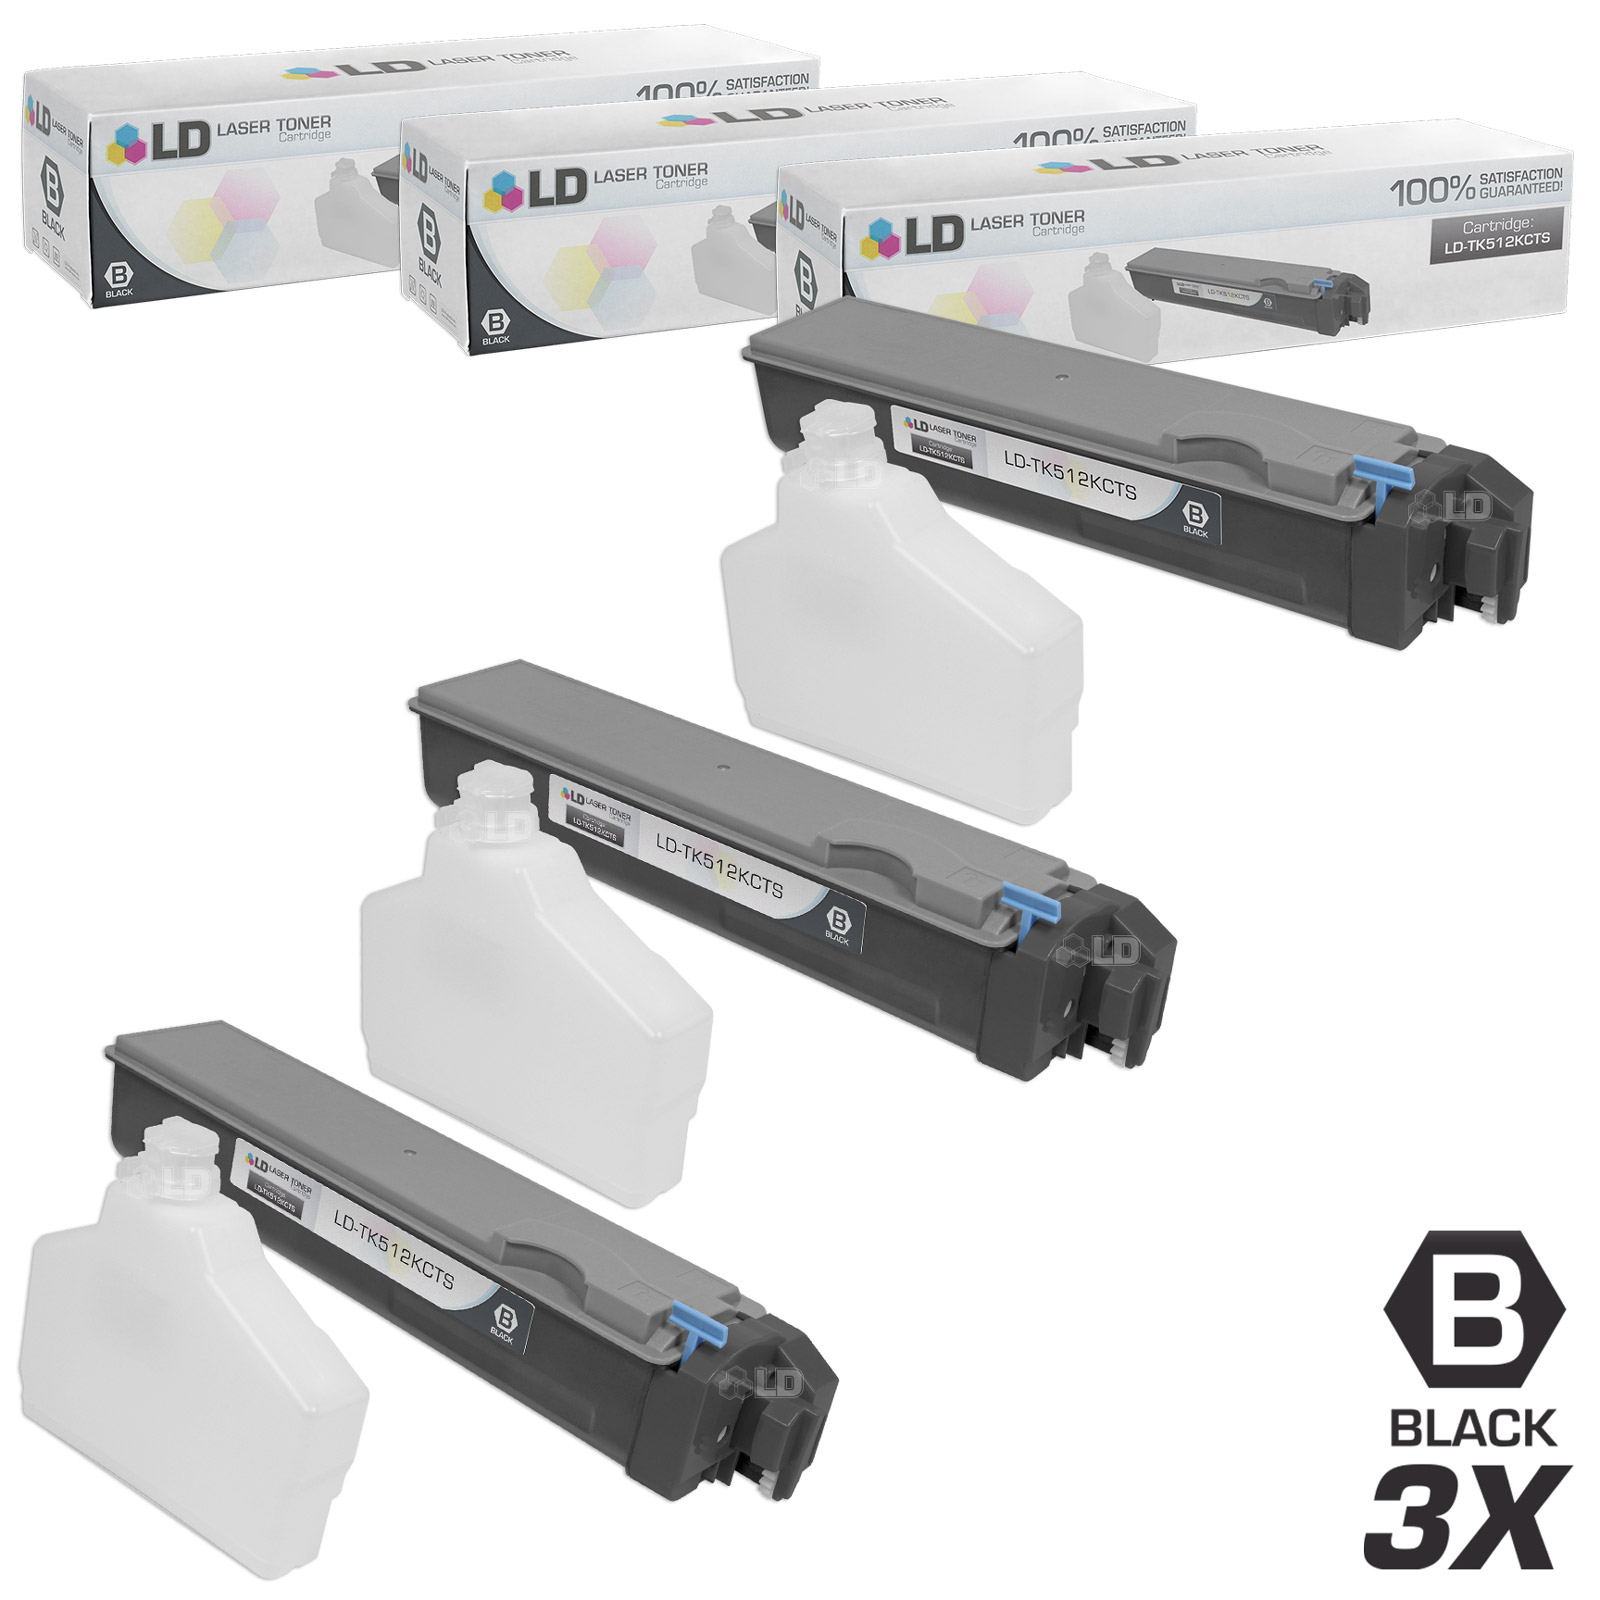 LD Compatible Replacements for Kyocera-Mita TK-512K Set of 3 Black Laser Toner Cartridges for use in Kyocera-Mita FS-C5020N, FS-C5025N, and FS-C5030N s - image 1 of 1